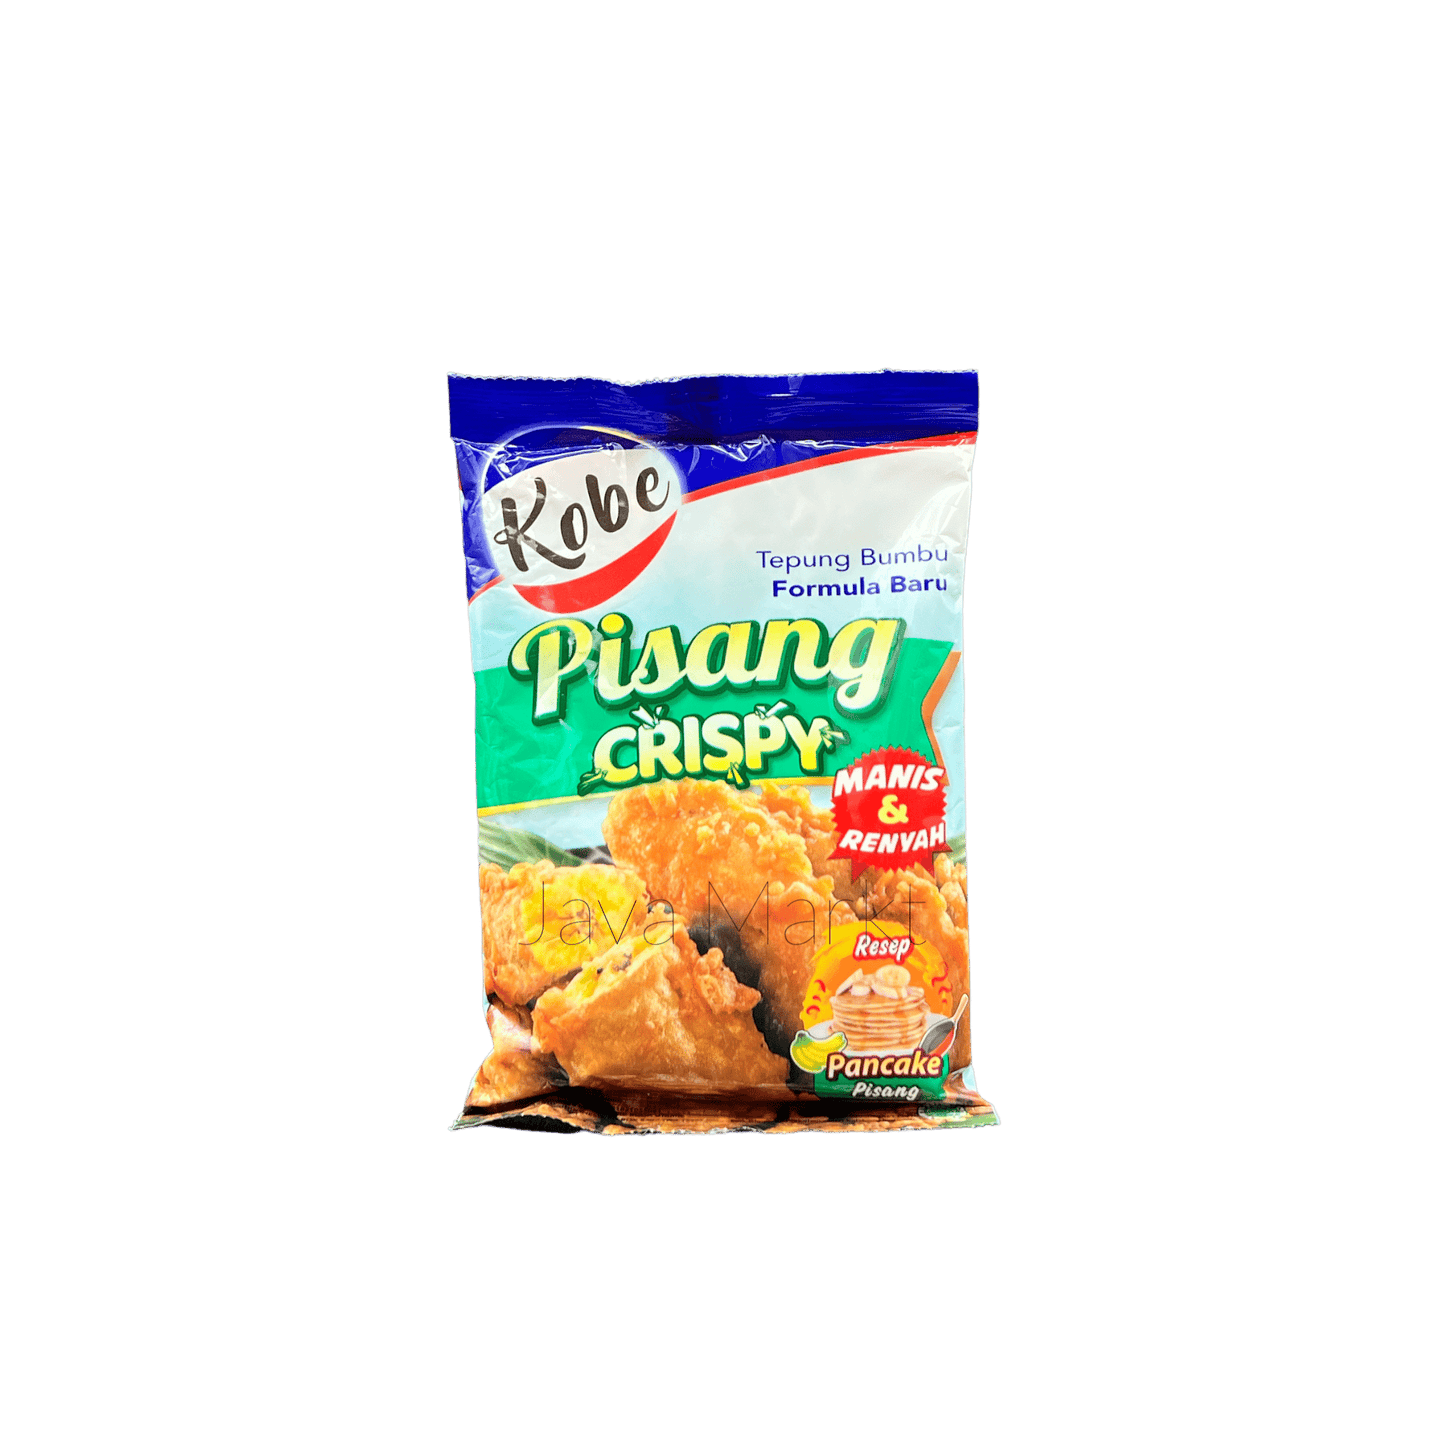 Kobe Pisang Crispy - Java Markt